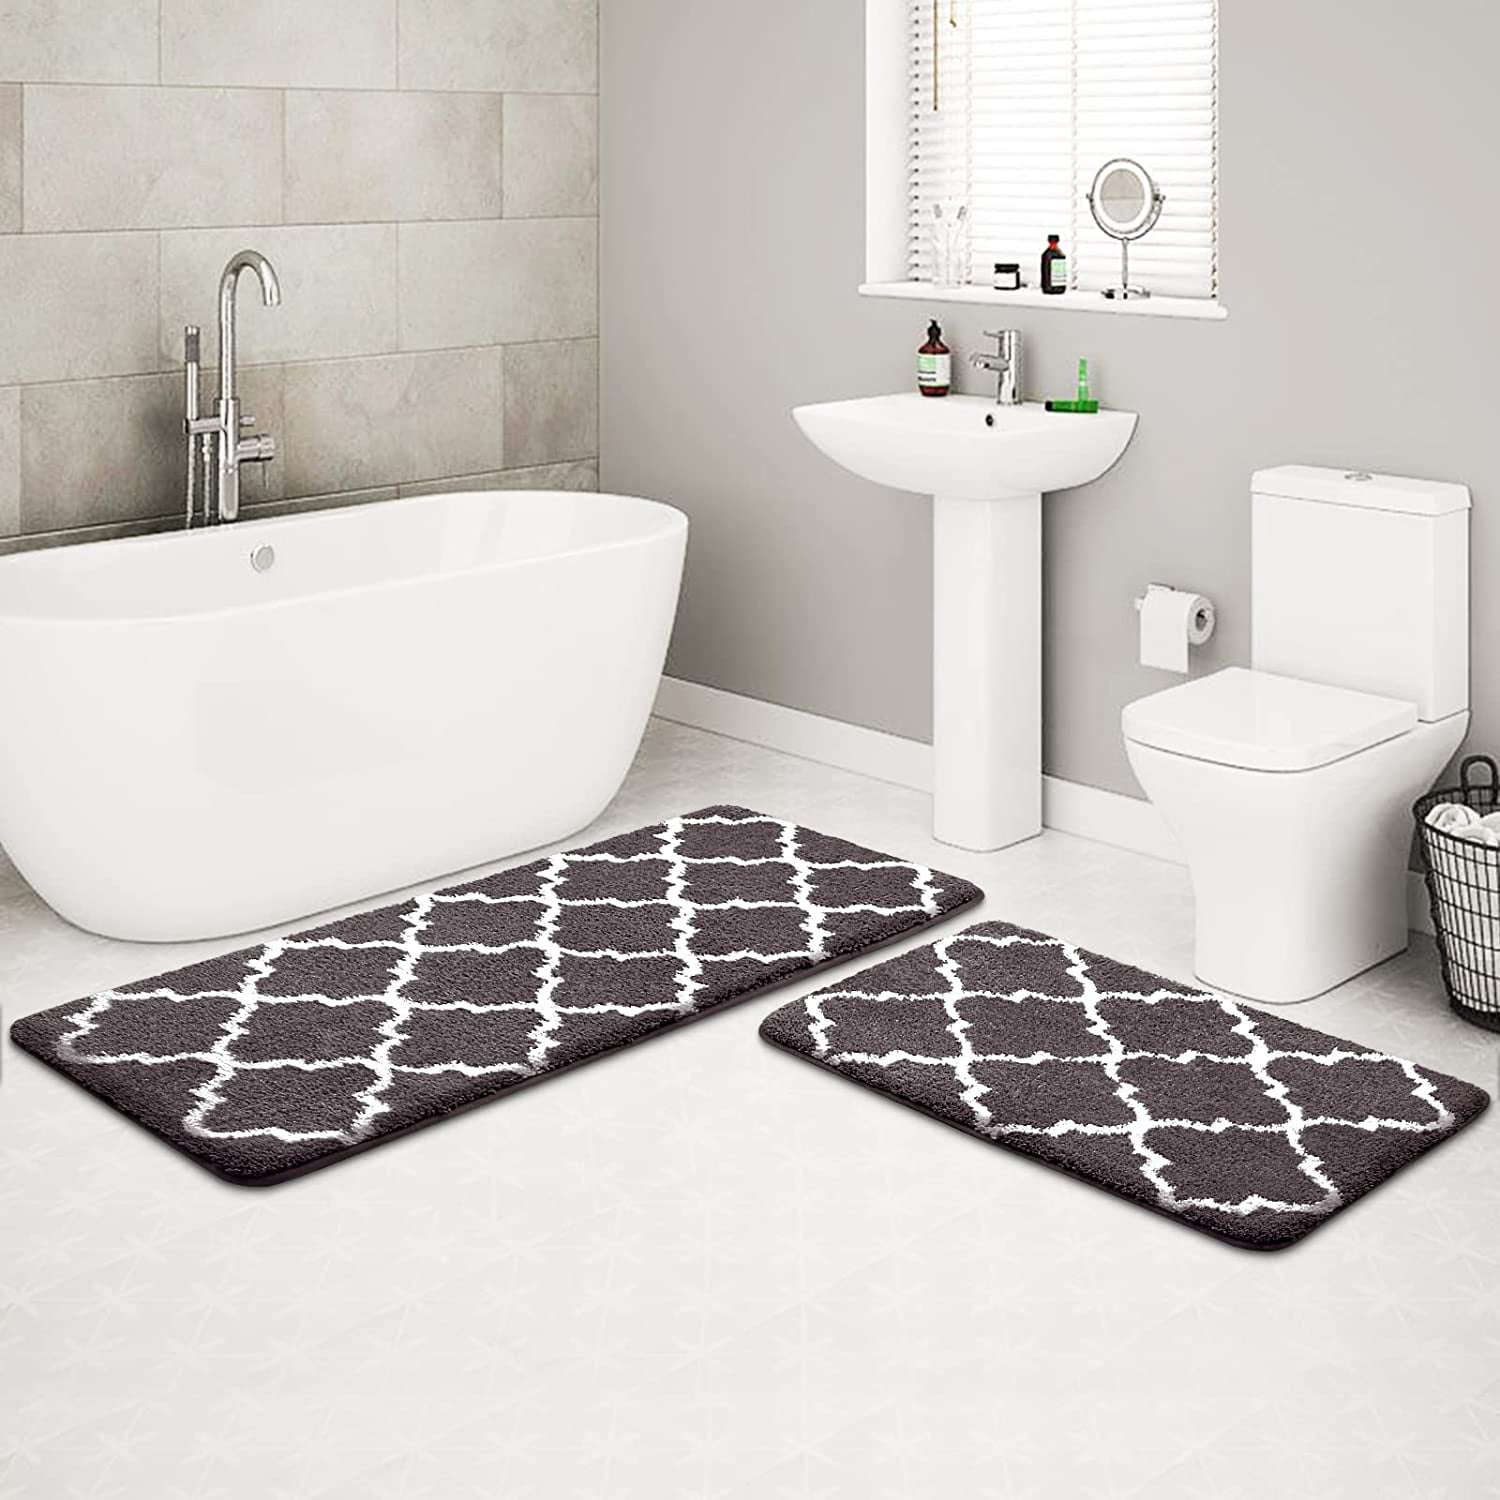 Details about   Bath Mat-Extra-Soft Plush Bath Shower Bathroom Rug 15 x 23 White 